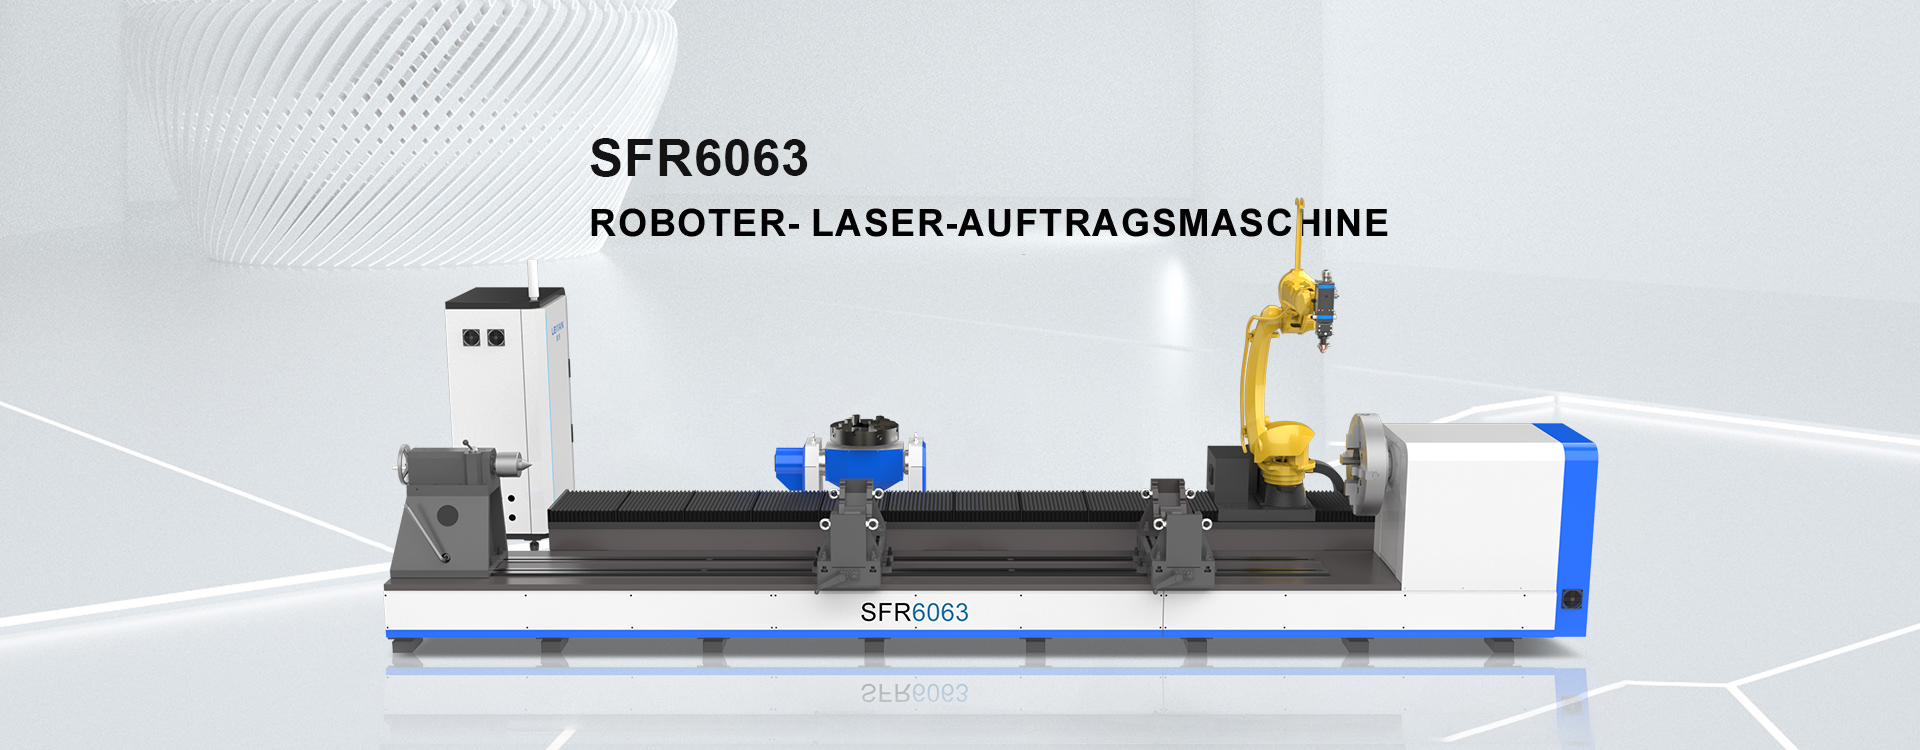 Roboter-Laser-Fassungsmaschine